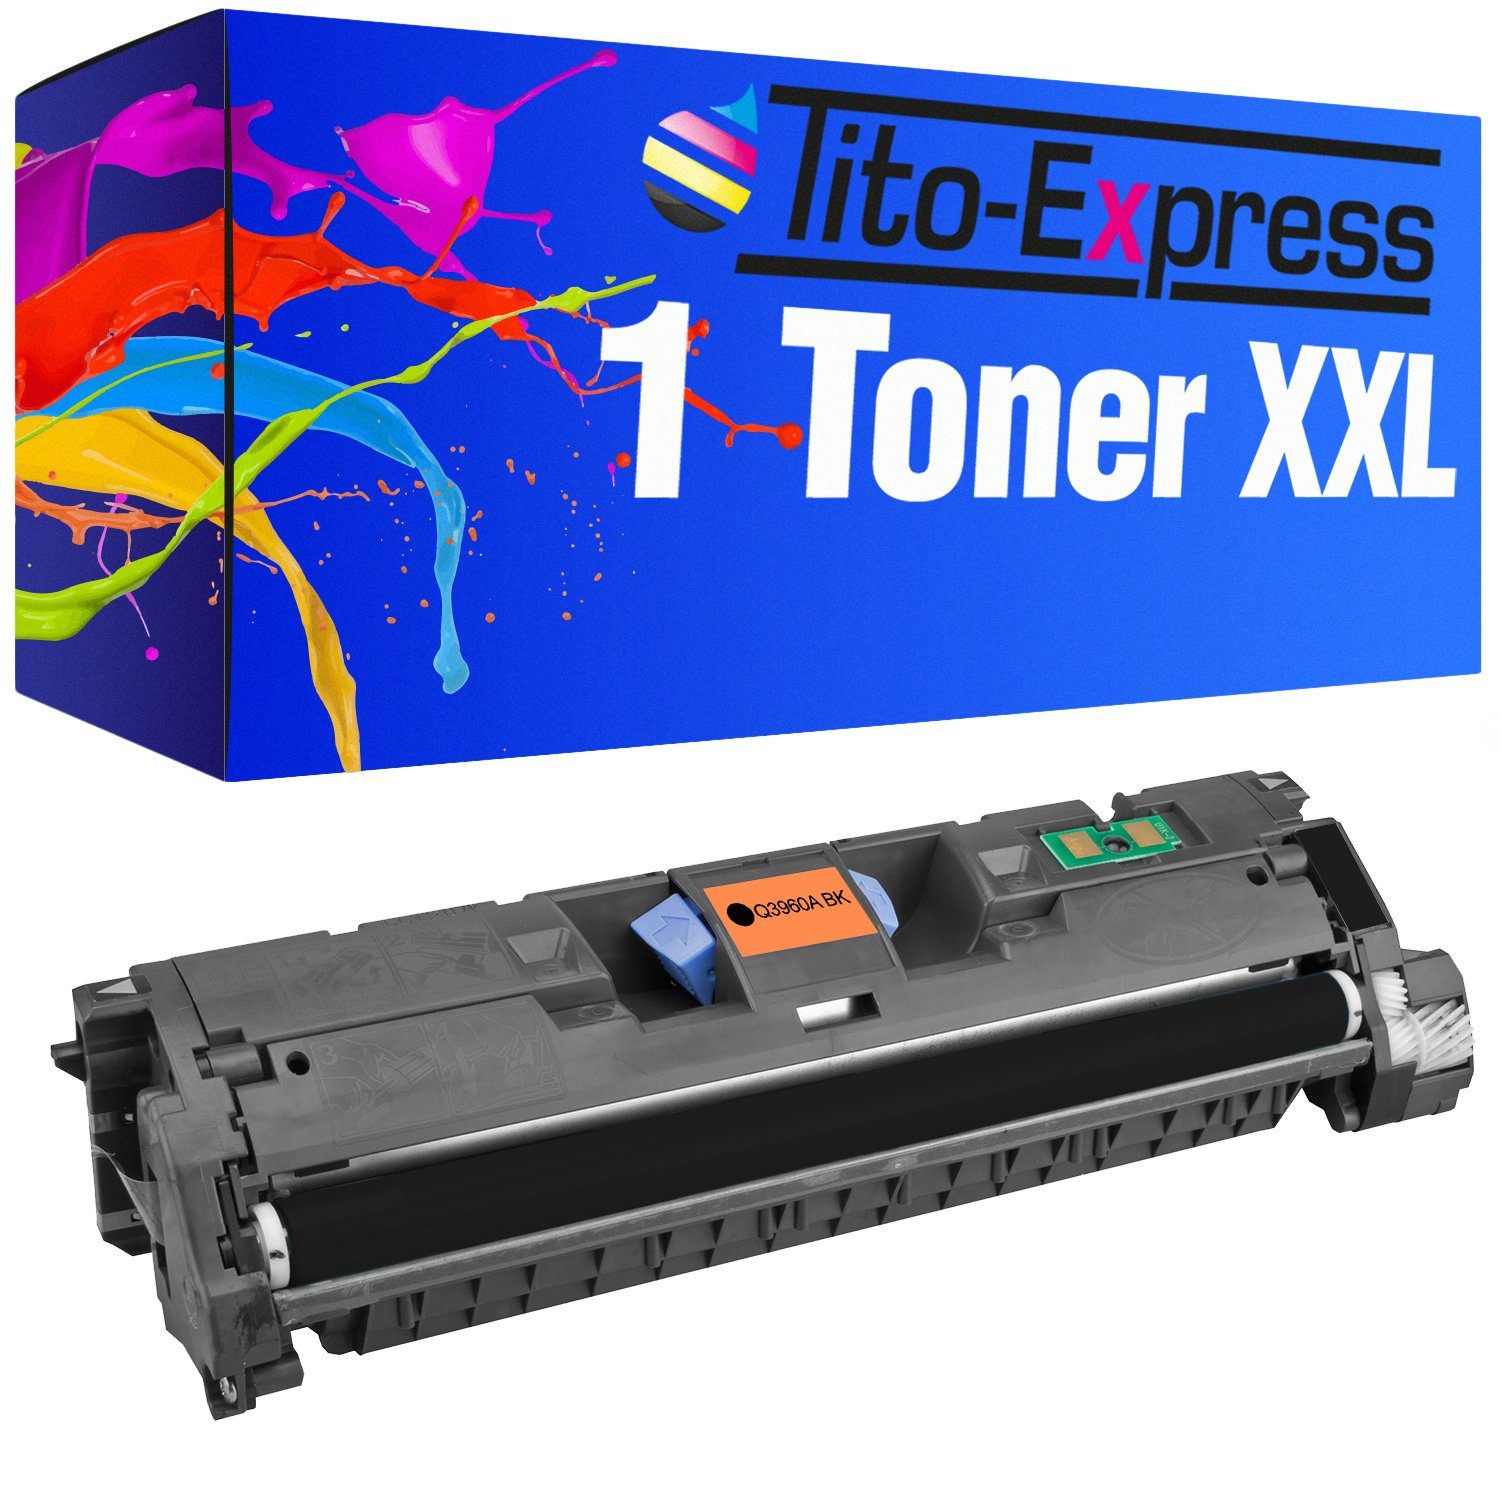 Tito-Express Tonerpatrone ersetzt HP Q 3960 A HP Q 3960A HPQ3960A Black, für Color Laserjet 2550 2550L 2550LN 2550N 2800 Series 2820 AIO 2840